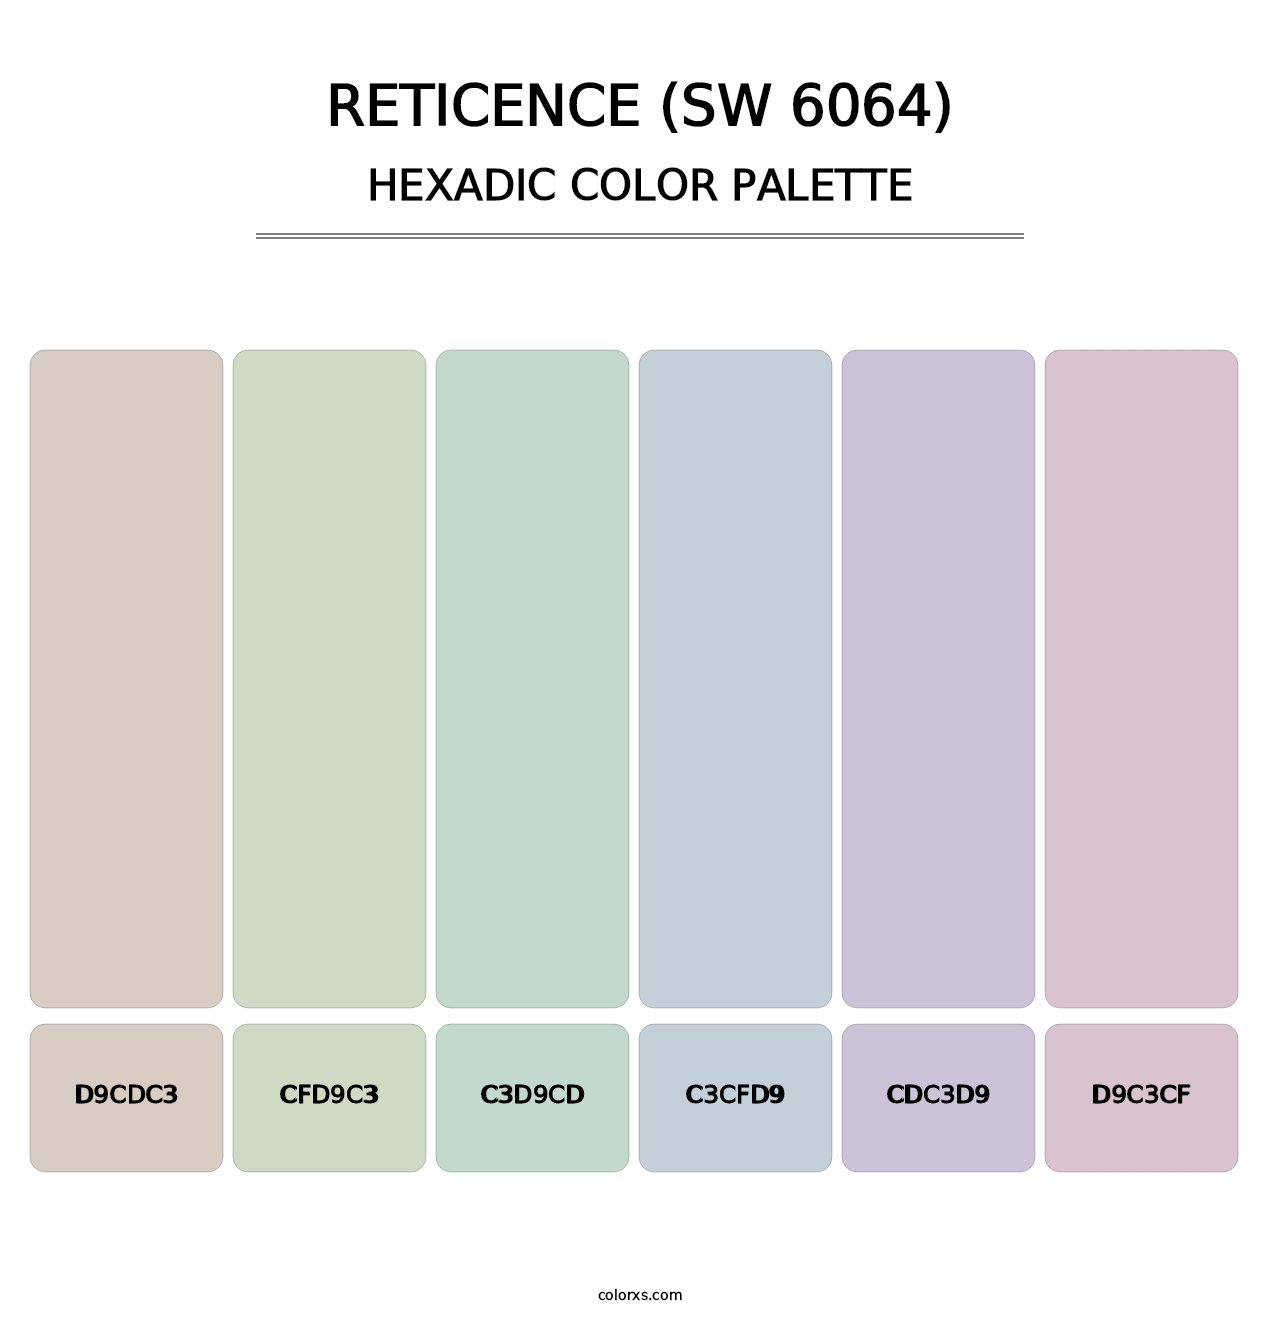 Reticence (SW 6064) - Hexadic Color Palette